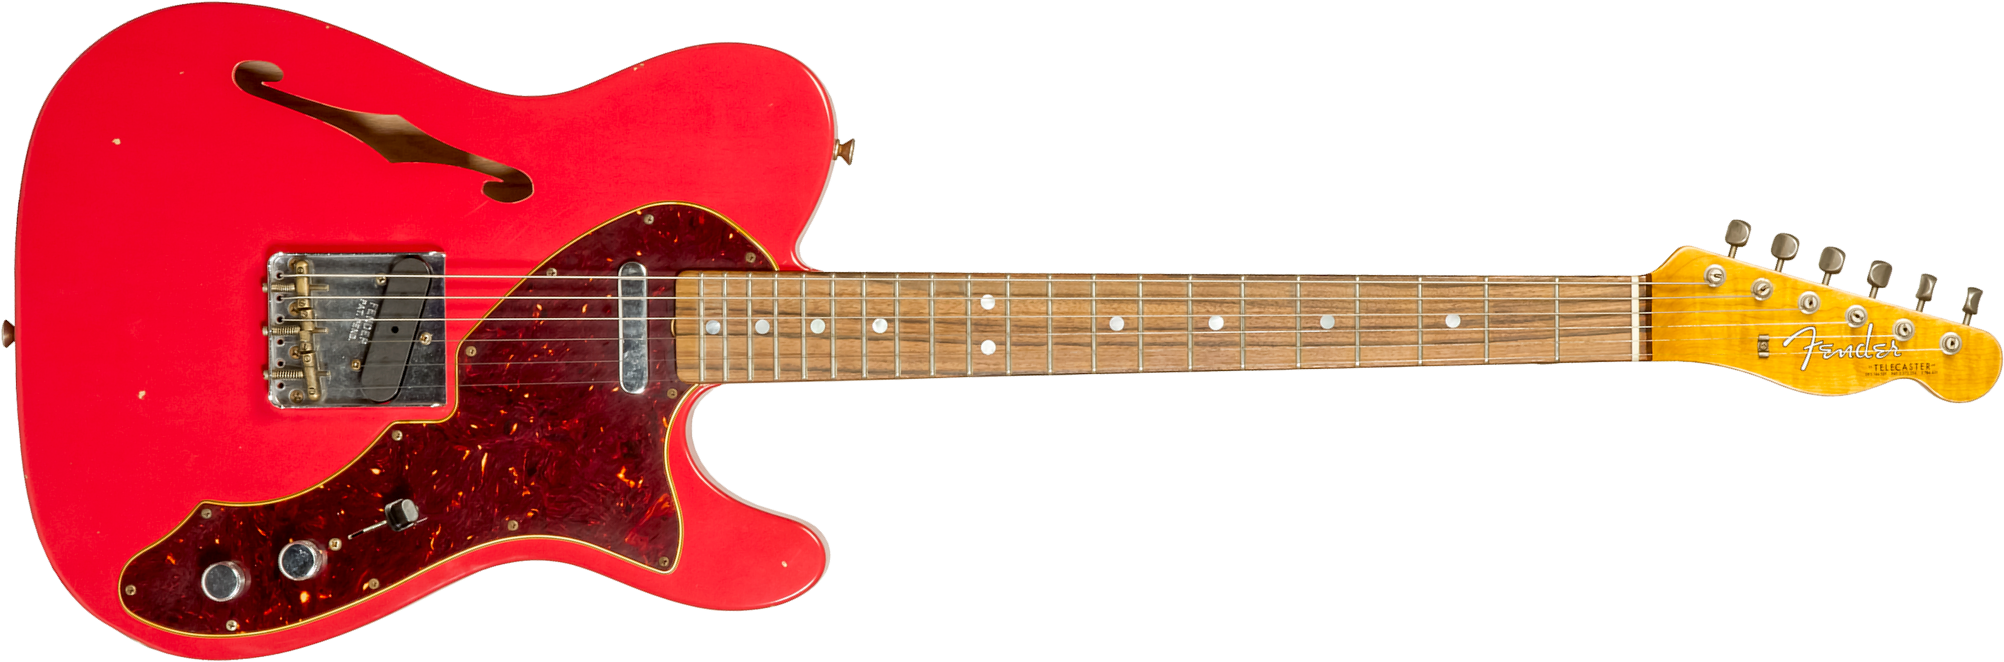 Fender Custom Shop Tele Thinline '60s Ltd 2s Ht Rw #cz544990 - Journeyman Relic Fiesta Red - Semi-hollow electric guitar - Main picture